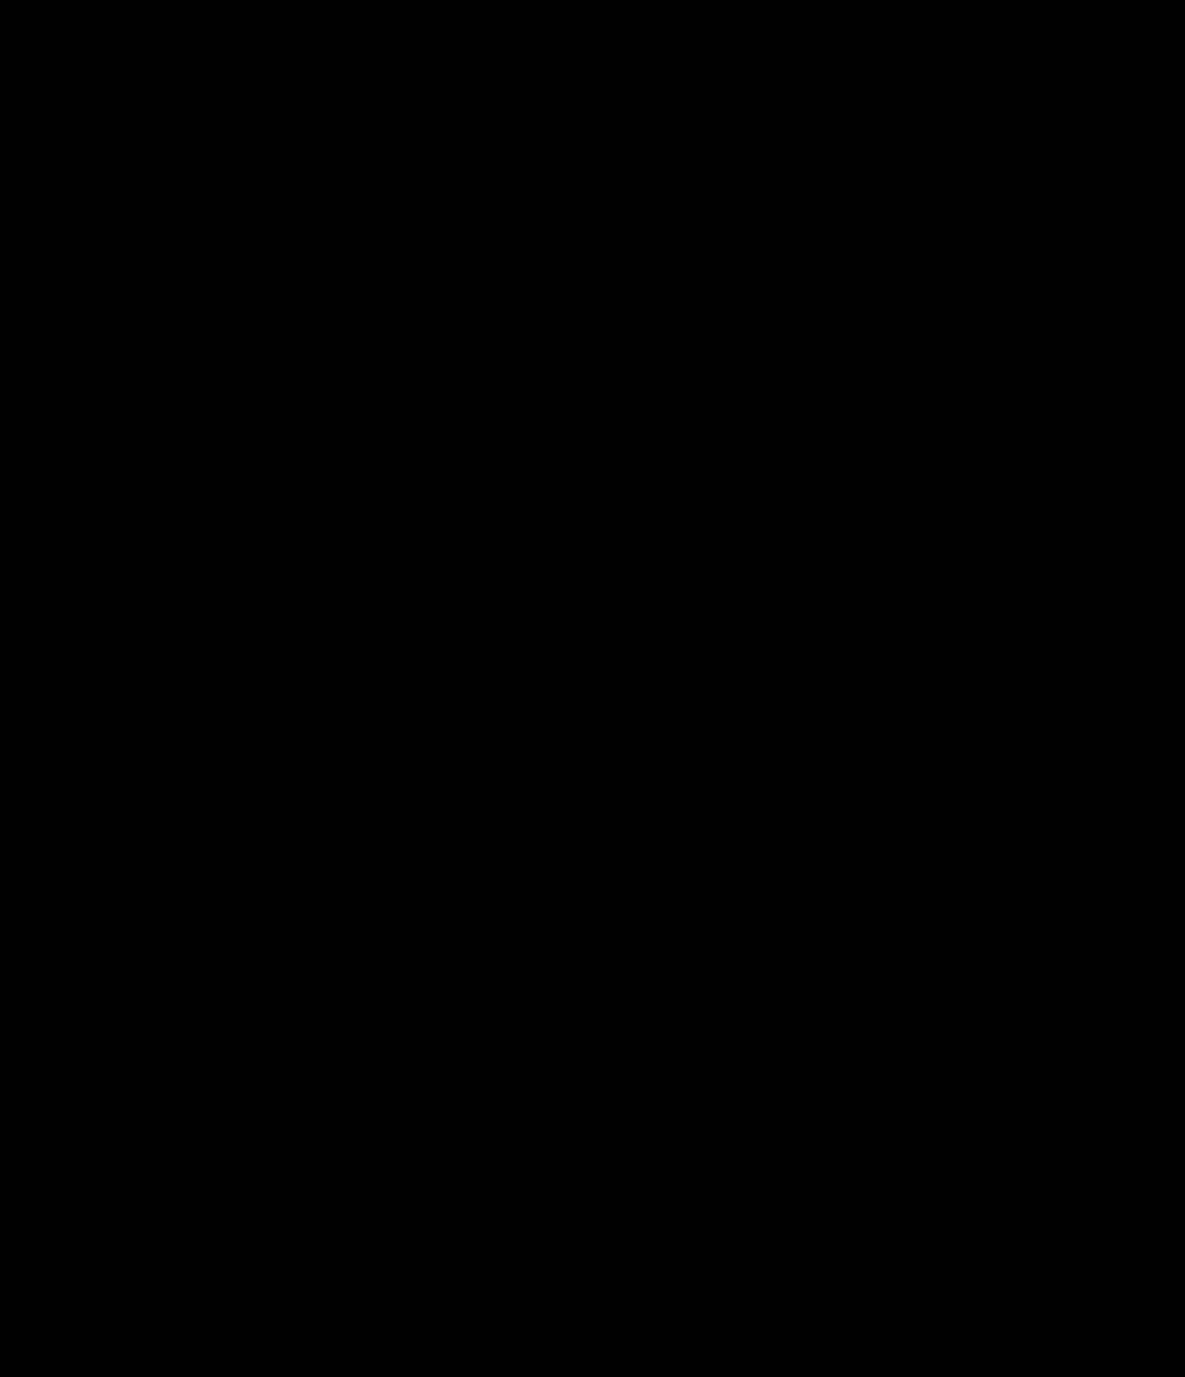 Monocle Black Background PNG image